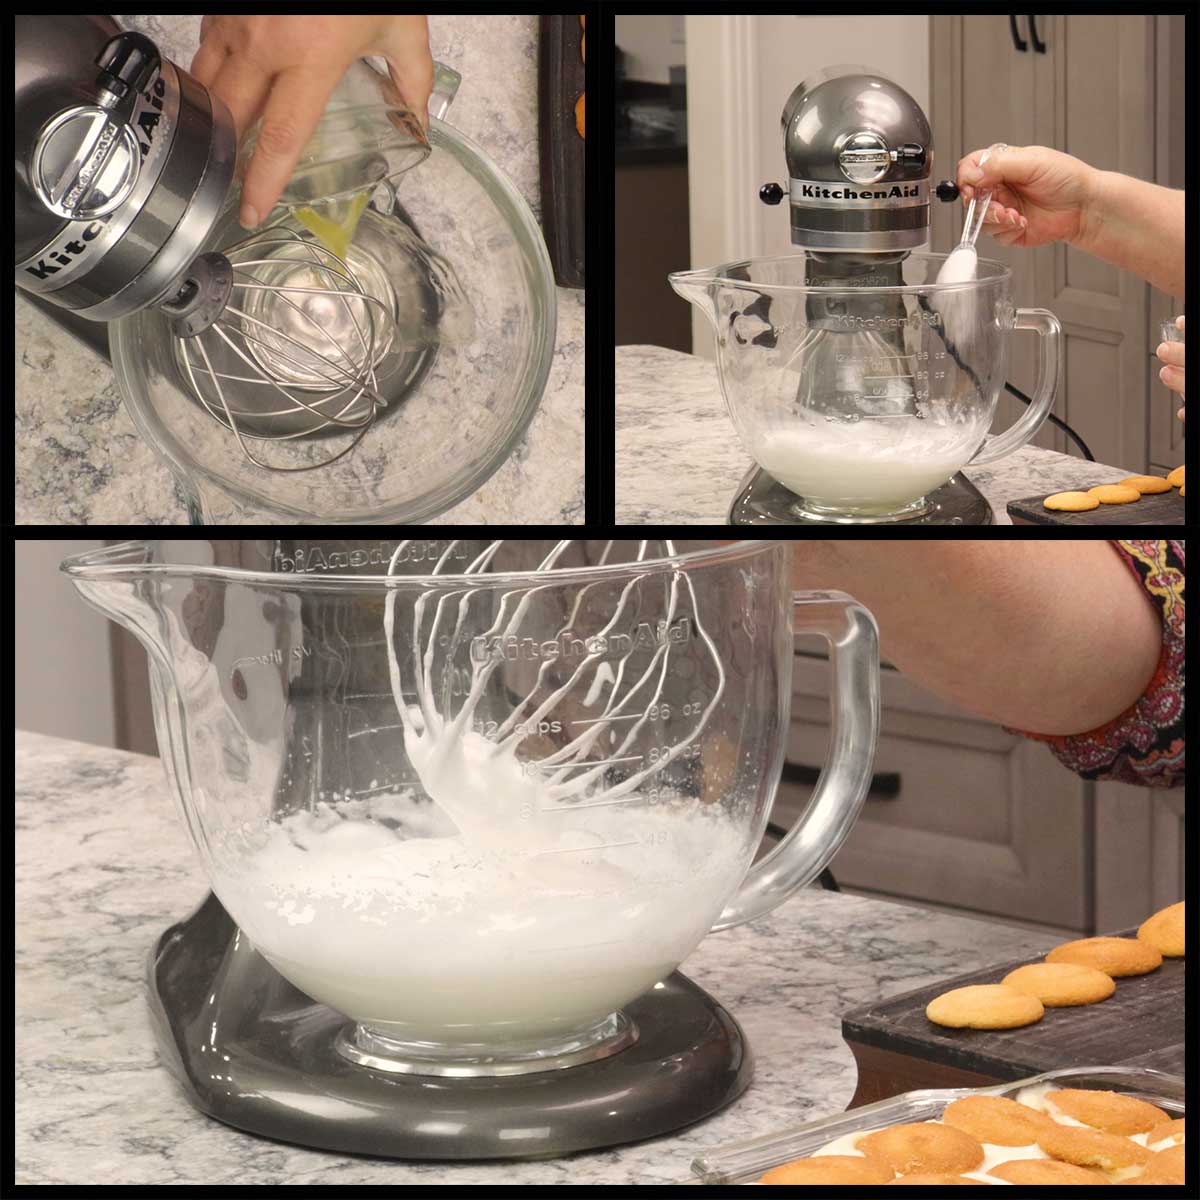 whipping the egg whites to make meringue.